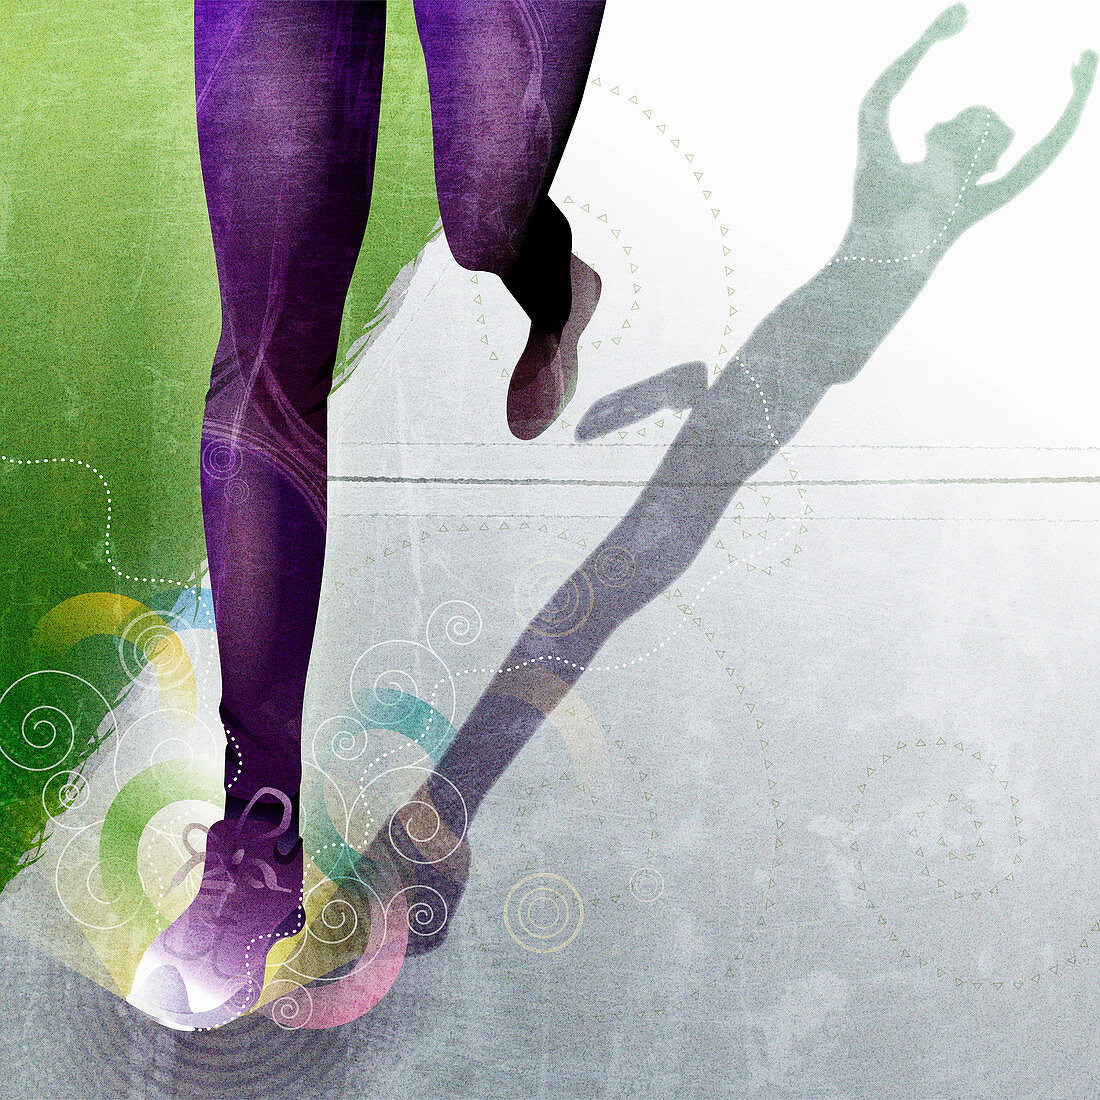 Legs of runner raising arms, illustration